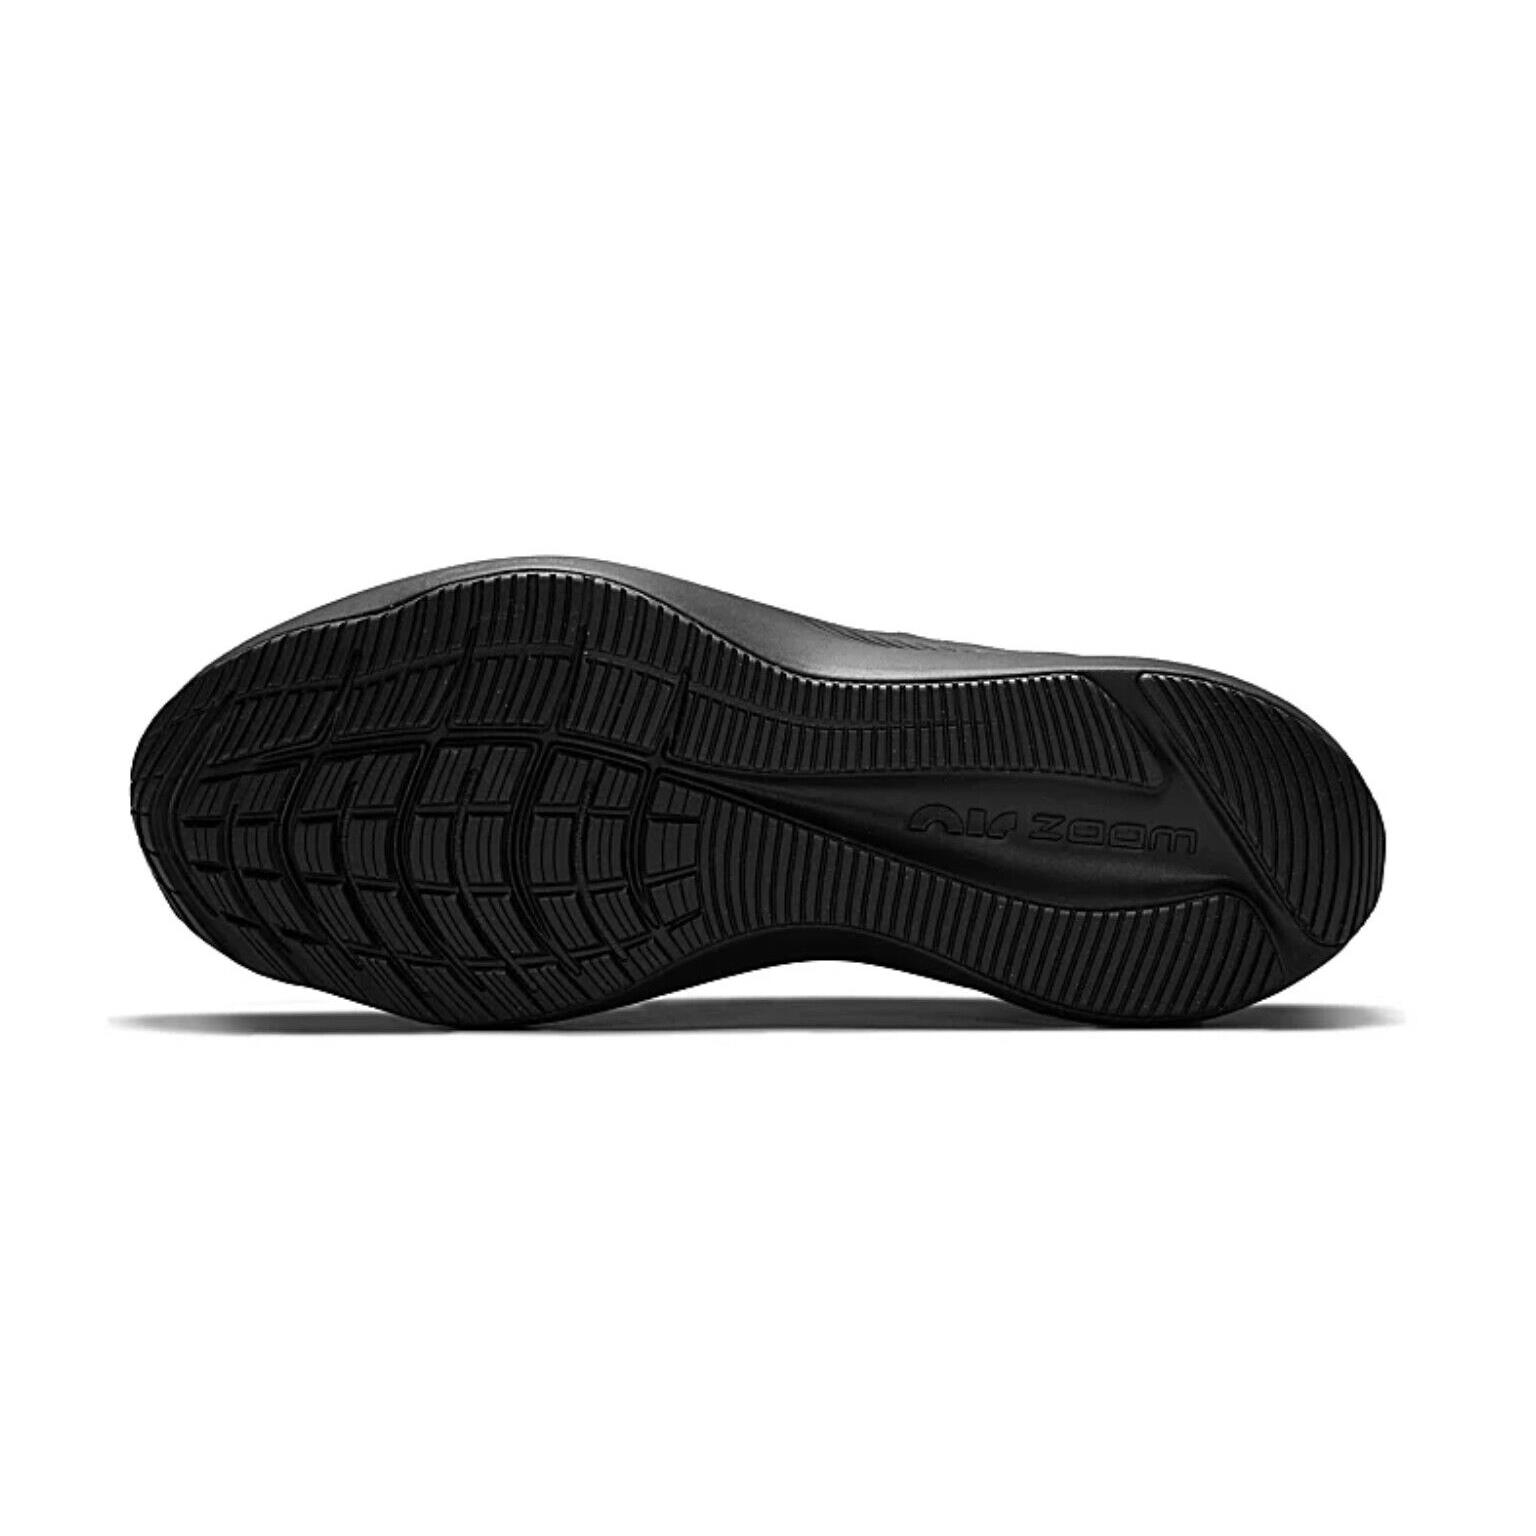 Nike shoes Zoom Winflo - Black 5